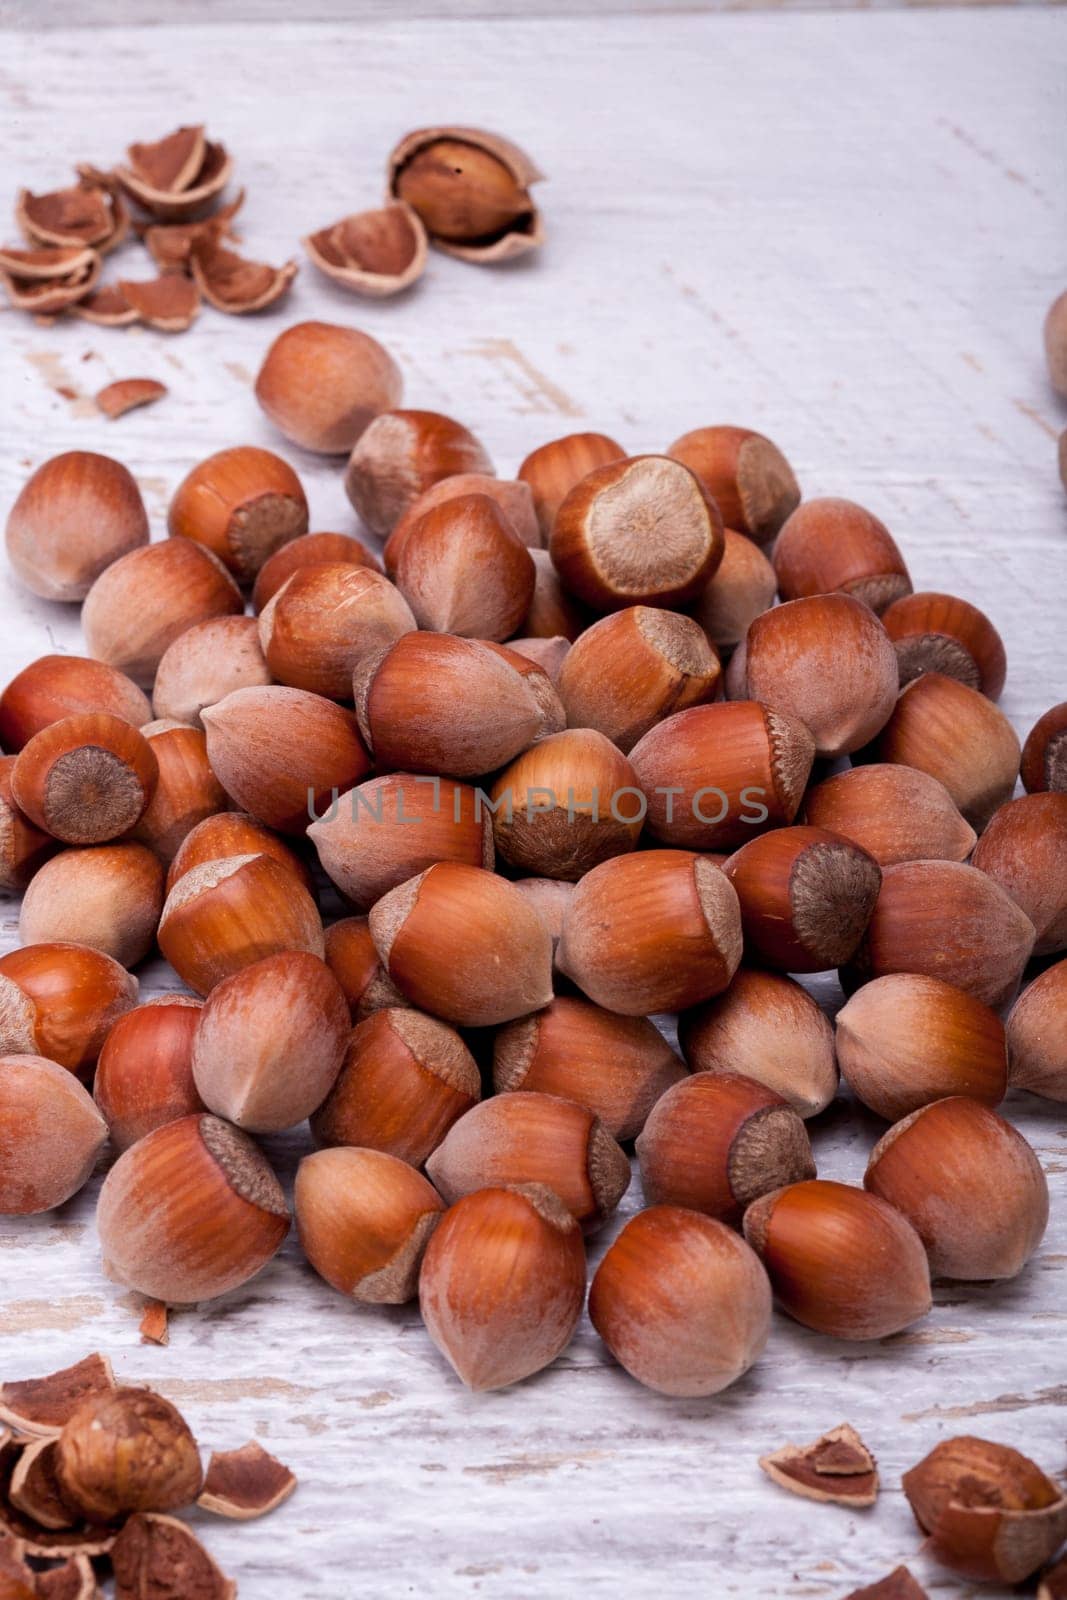 Brown Hazelnuts on white wooden background in studio photo. Healhty snacks